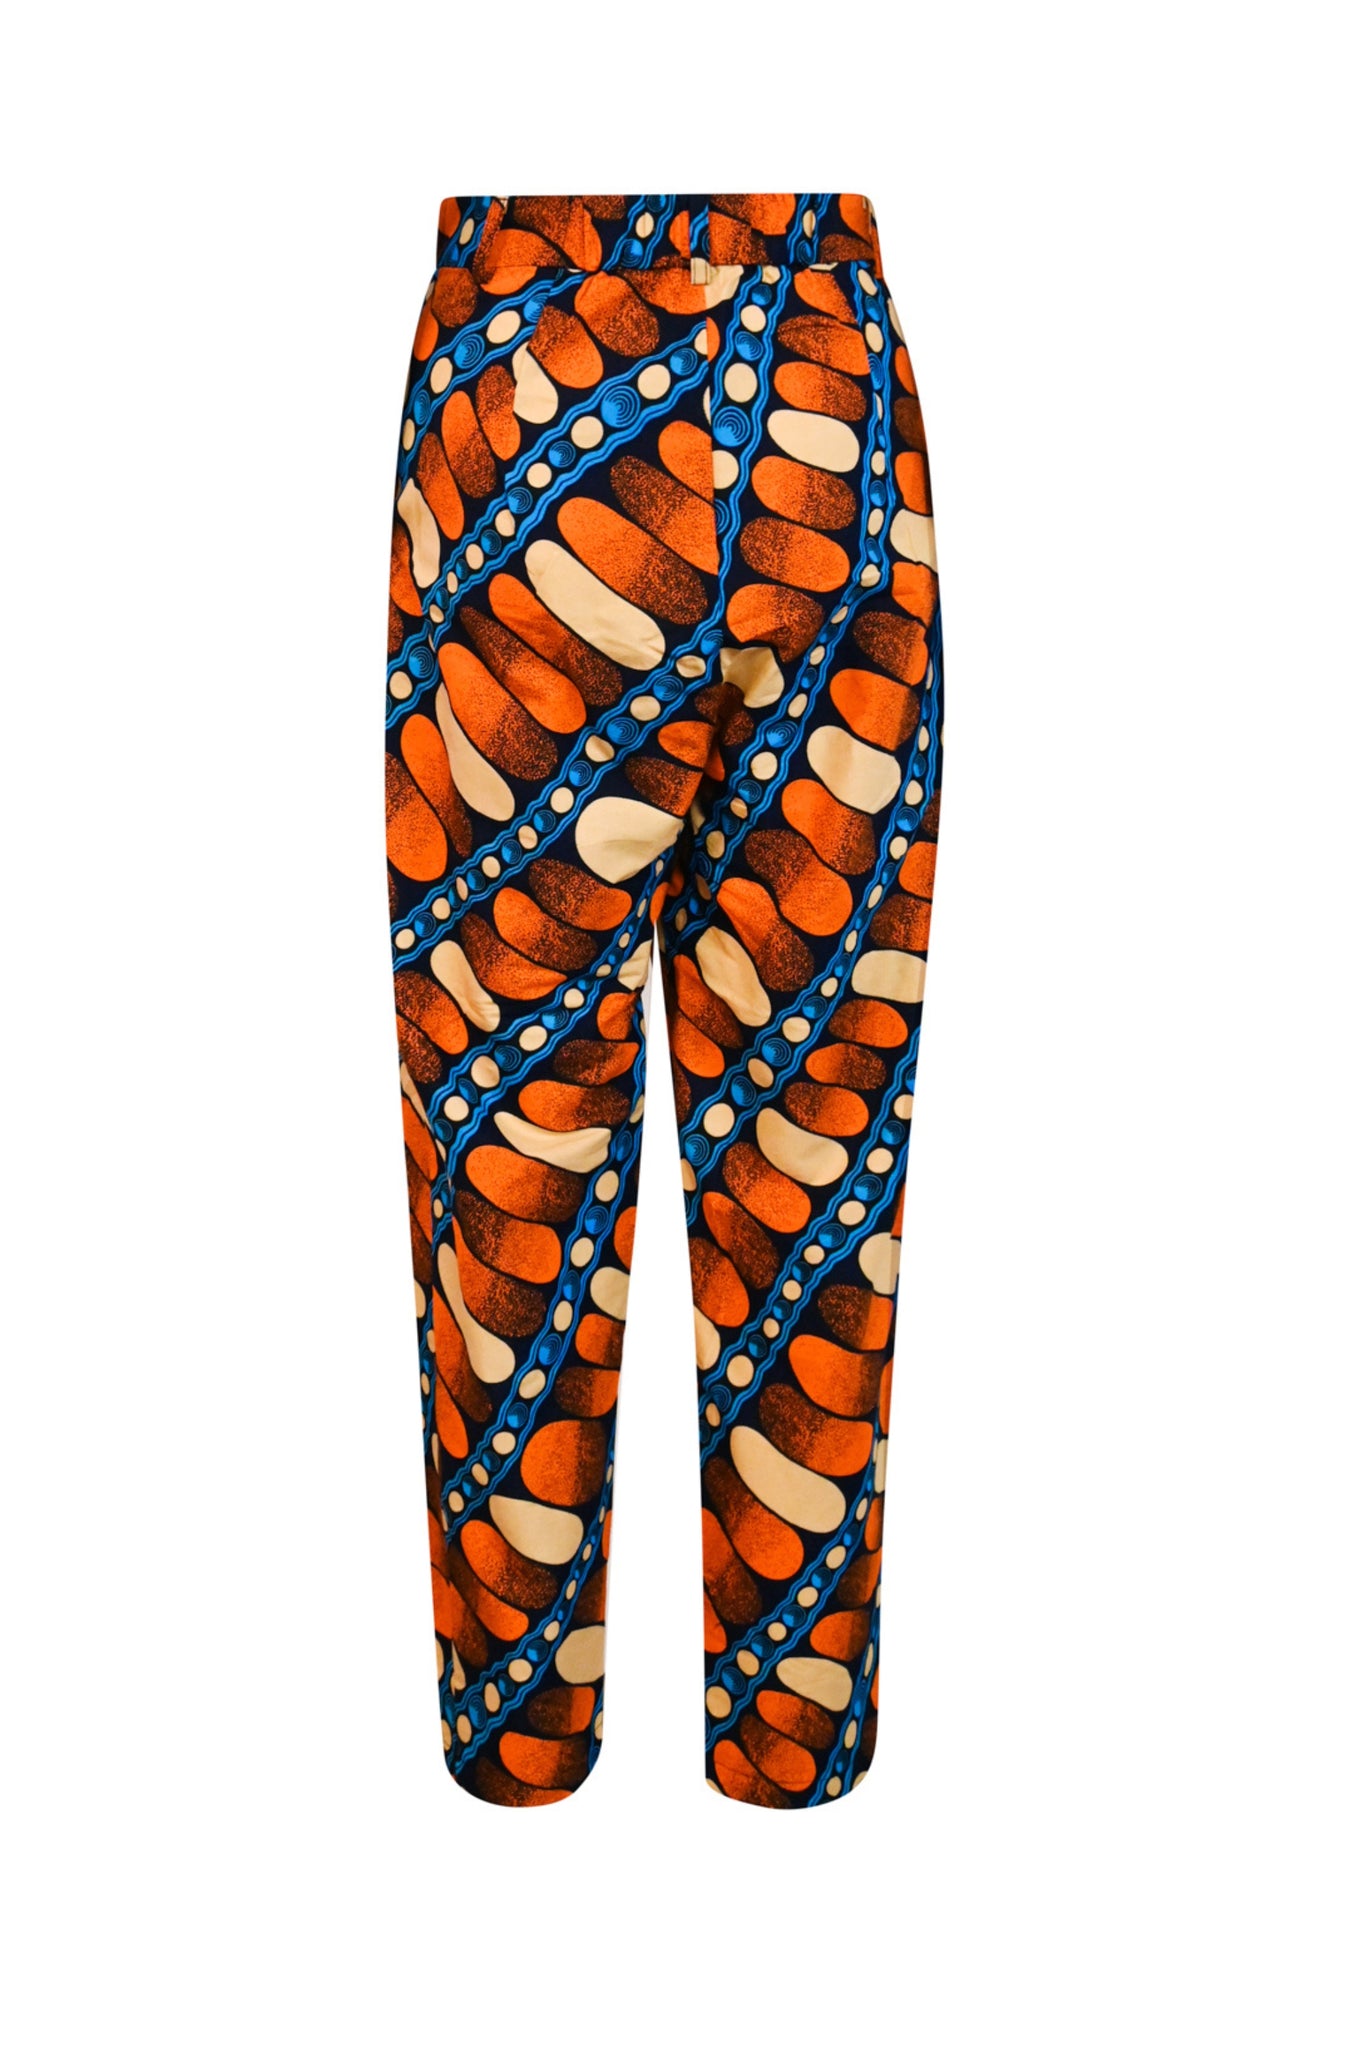 Adaora Tapered leg Pants - Orange/Blue Pearls and Pebbles Print |TROPICANA